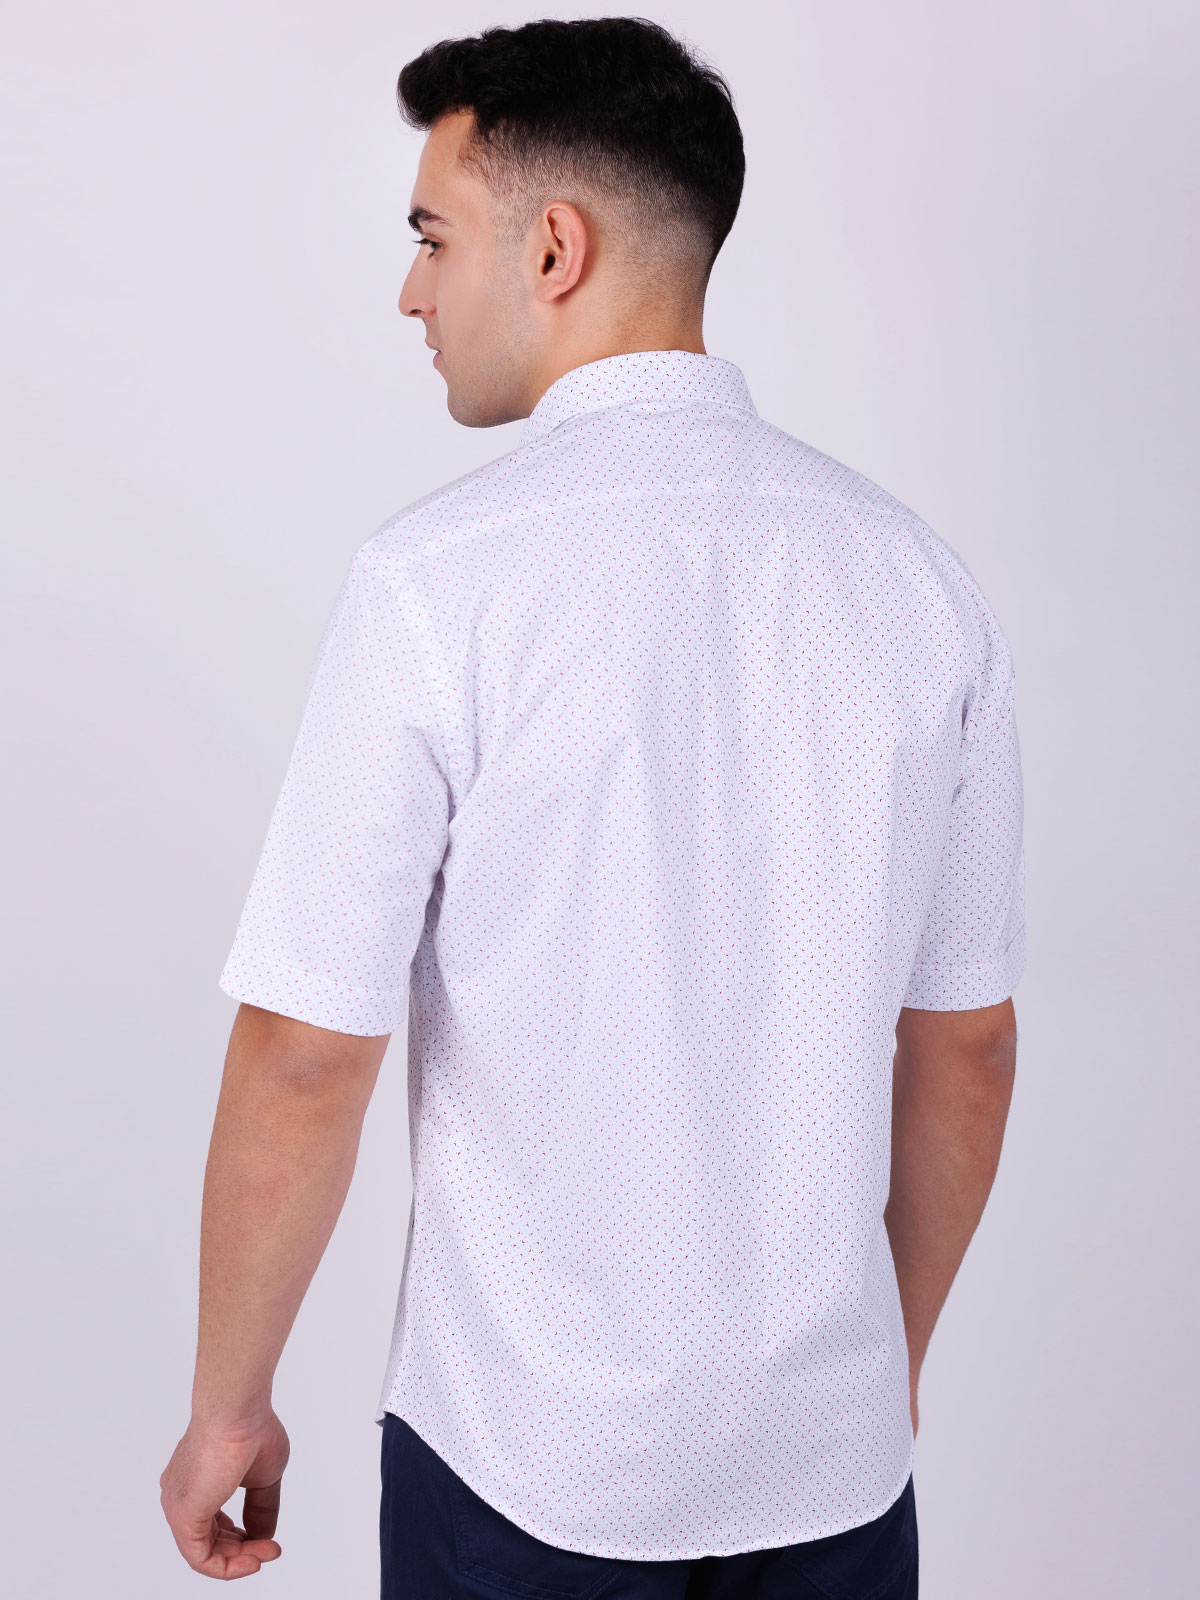 White shirt with figure print - 80230 € 38.81 img4